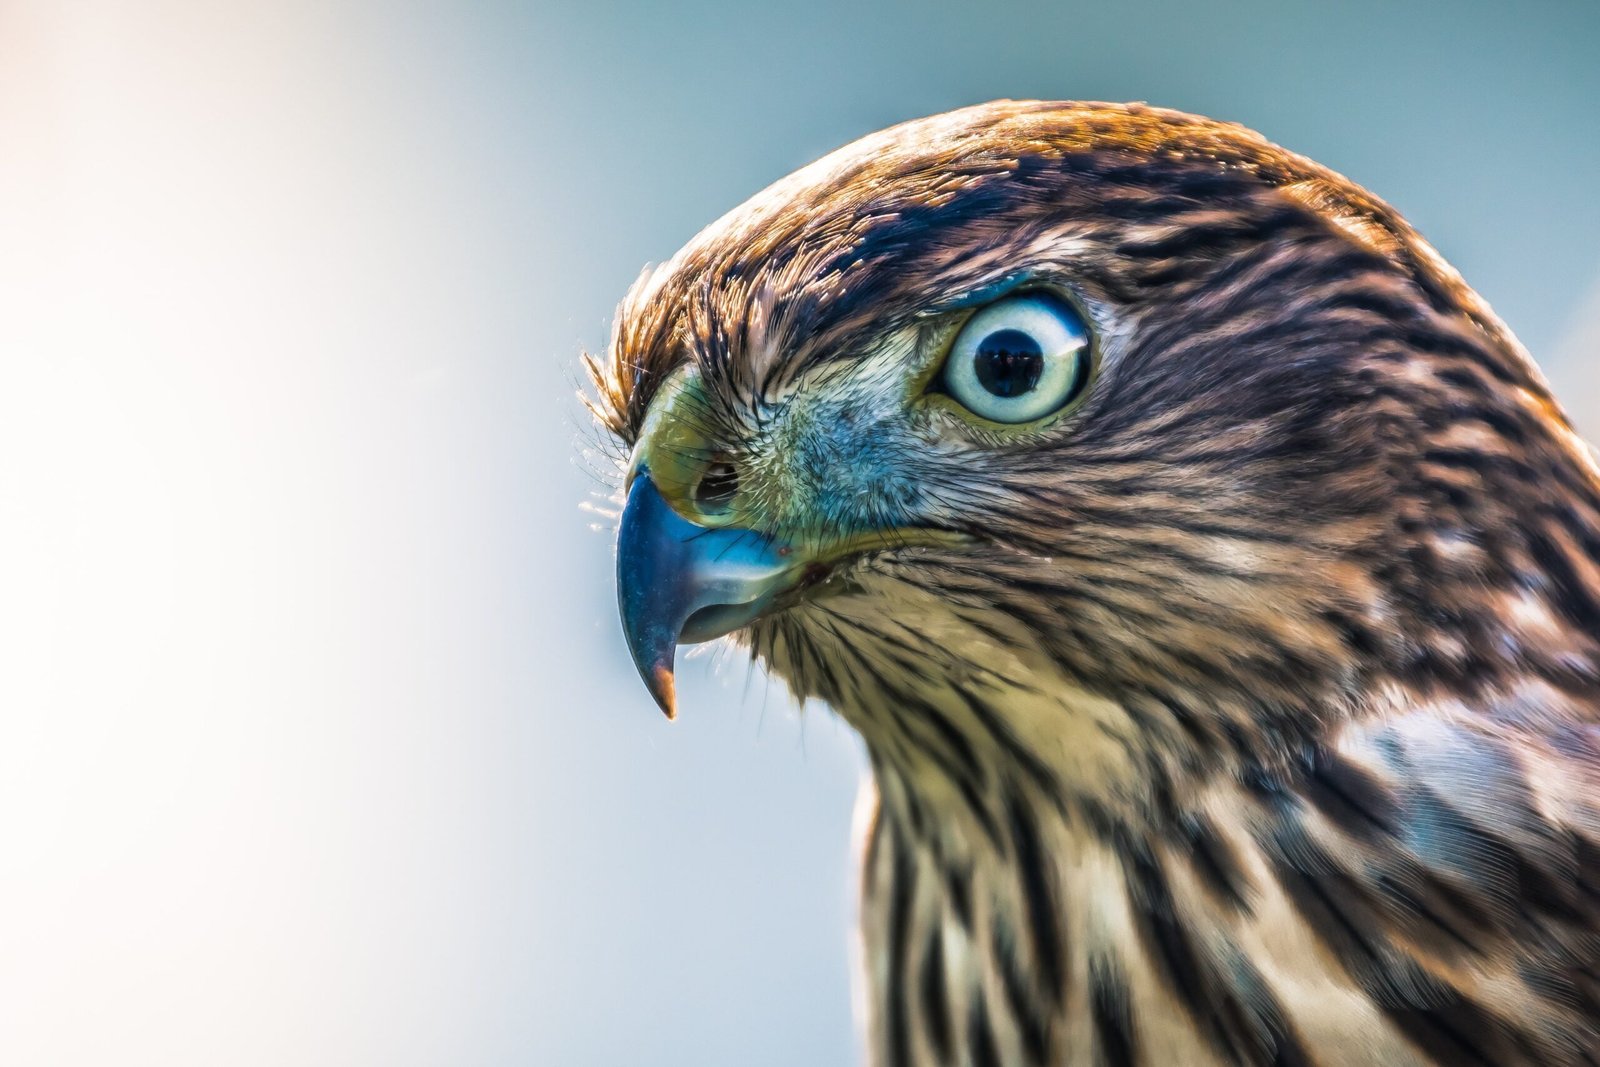 Photograph of a hawk